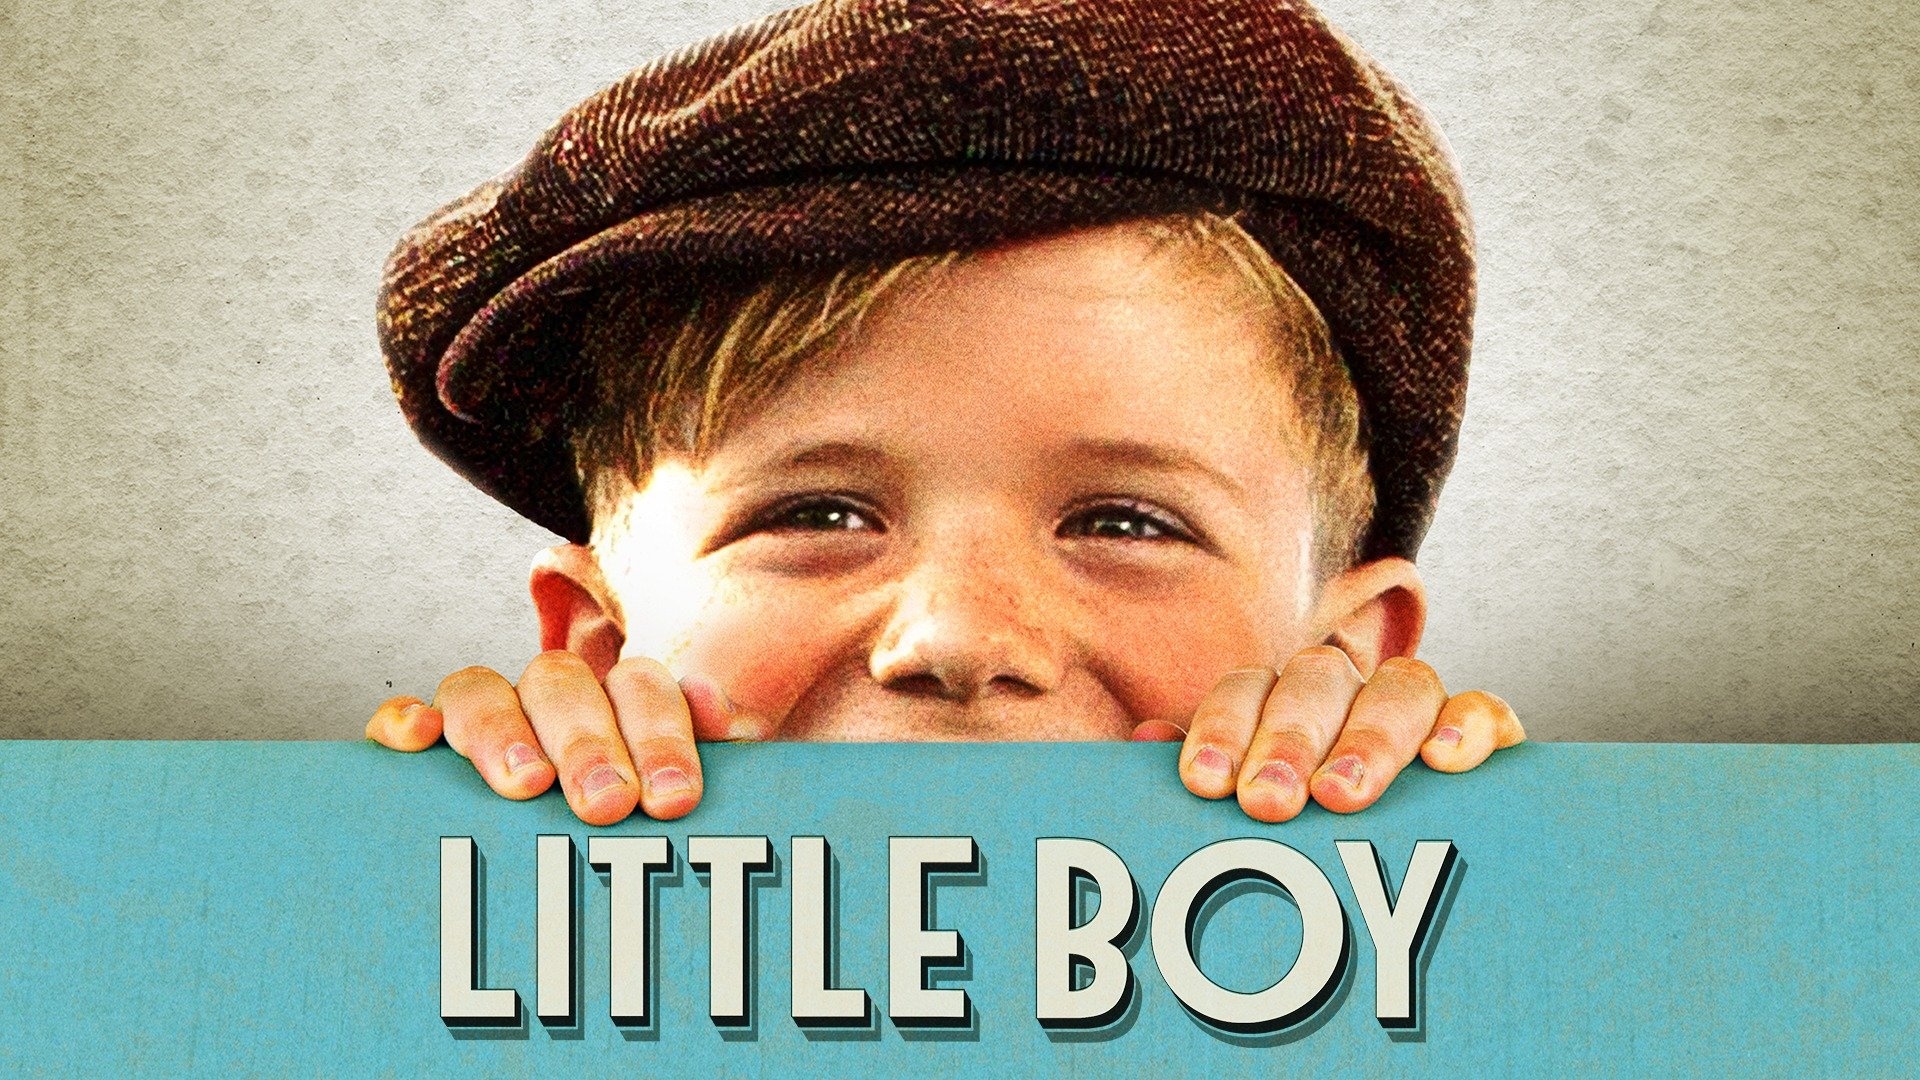 Little Boy Movie, Full movie online, Compelling plot, Plex streaming platform, 1920x1080 Full HD Desktop